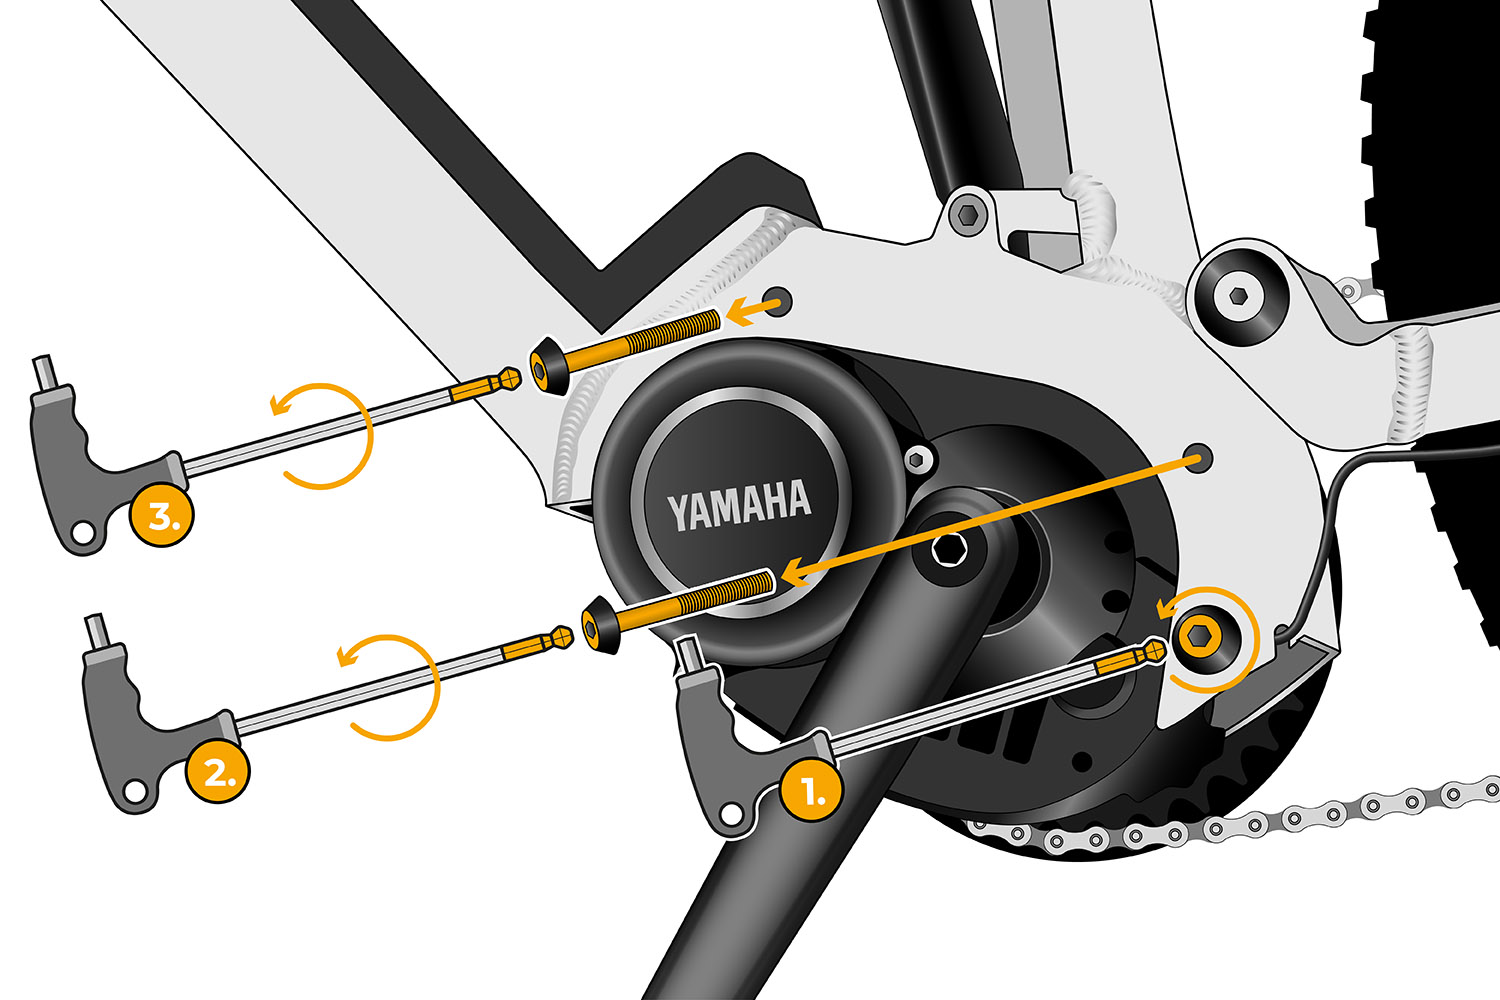 SpeedBox 3.0 for Yamaha :: SpeedBox Tuning